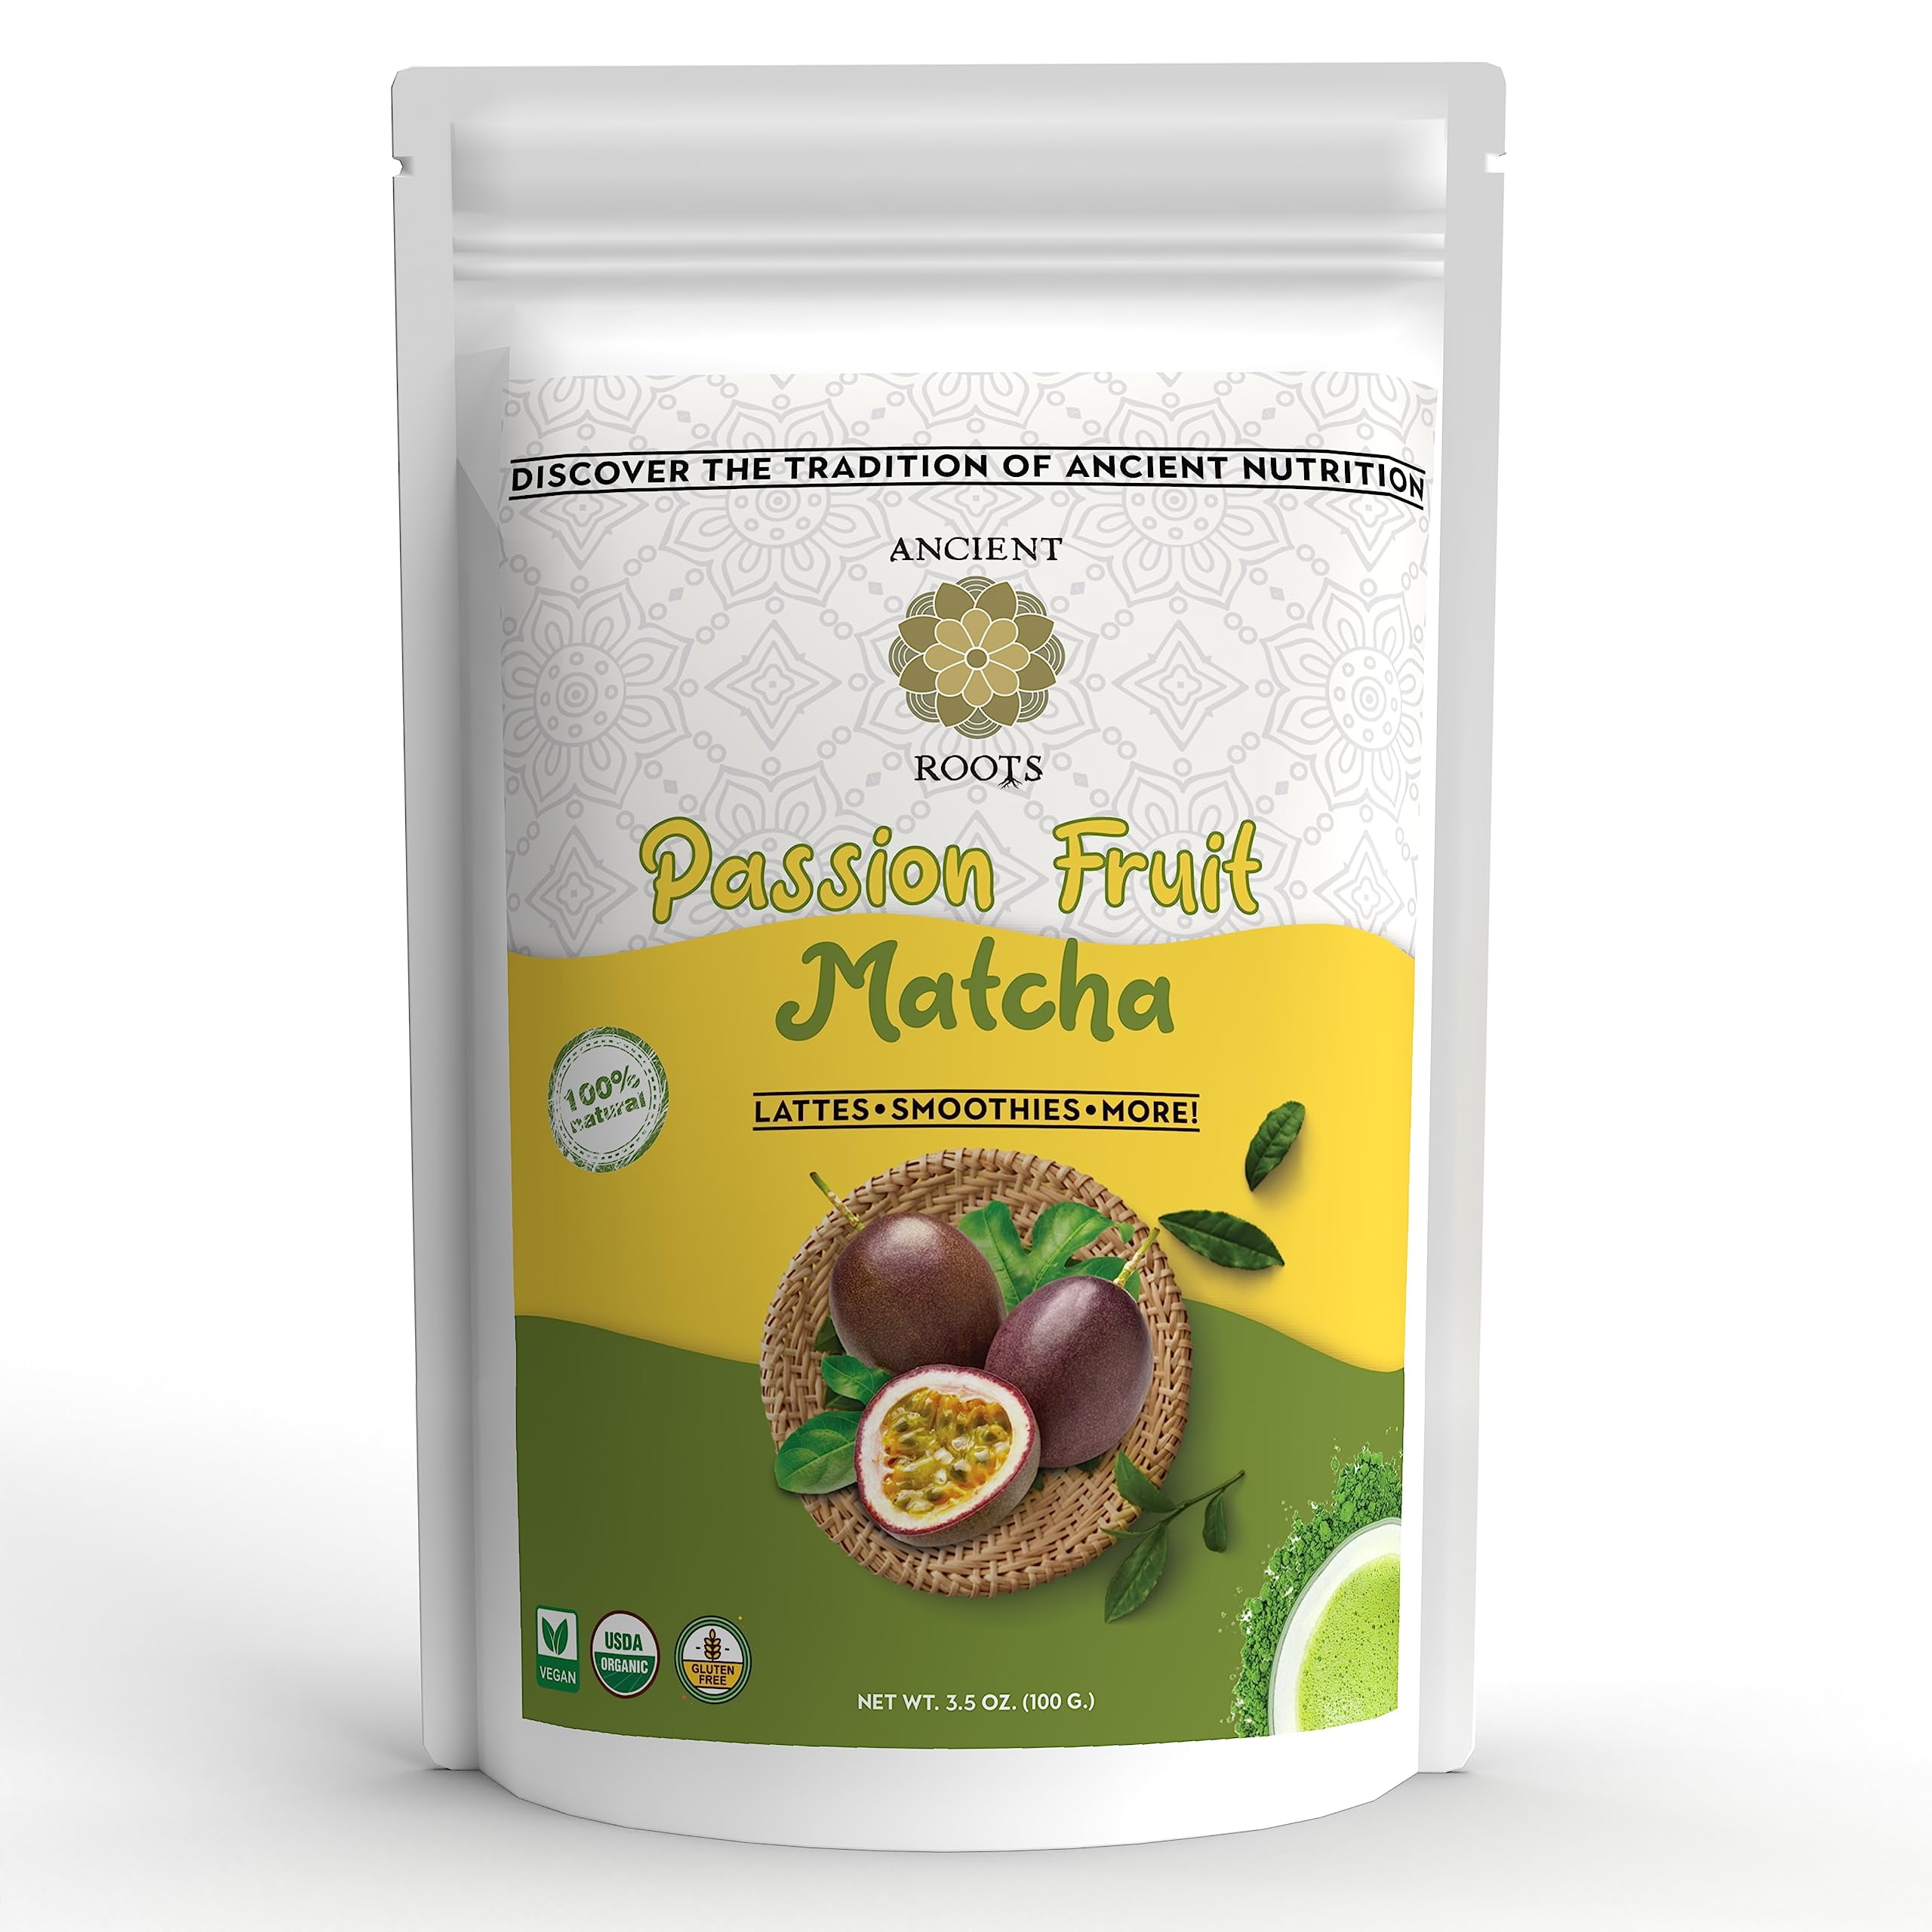 Matcha Slim - Energy Drink Mix Powder with Taurine & Spirulina 3.53oz –  Natural, Sugar Free, Vitamin Rich Green Tea for Women, Men